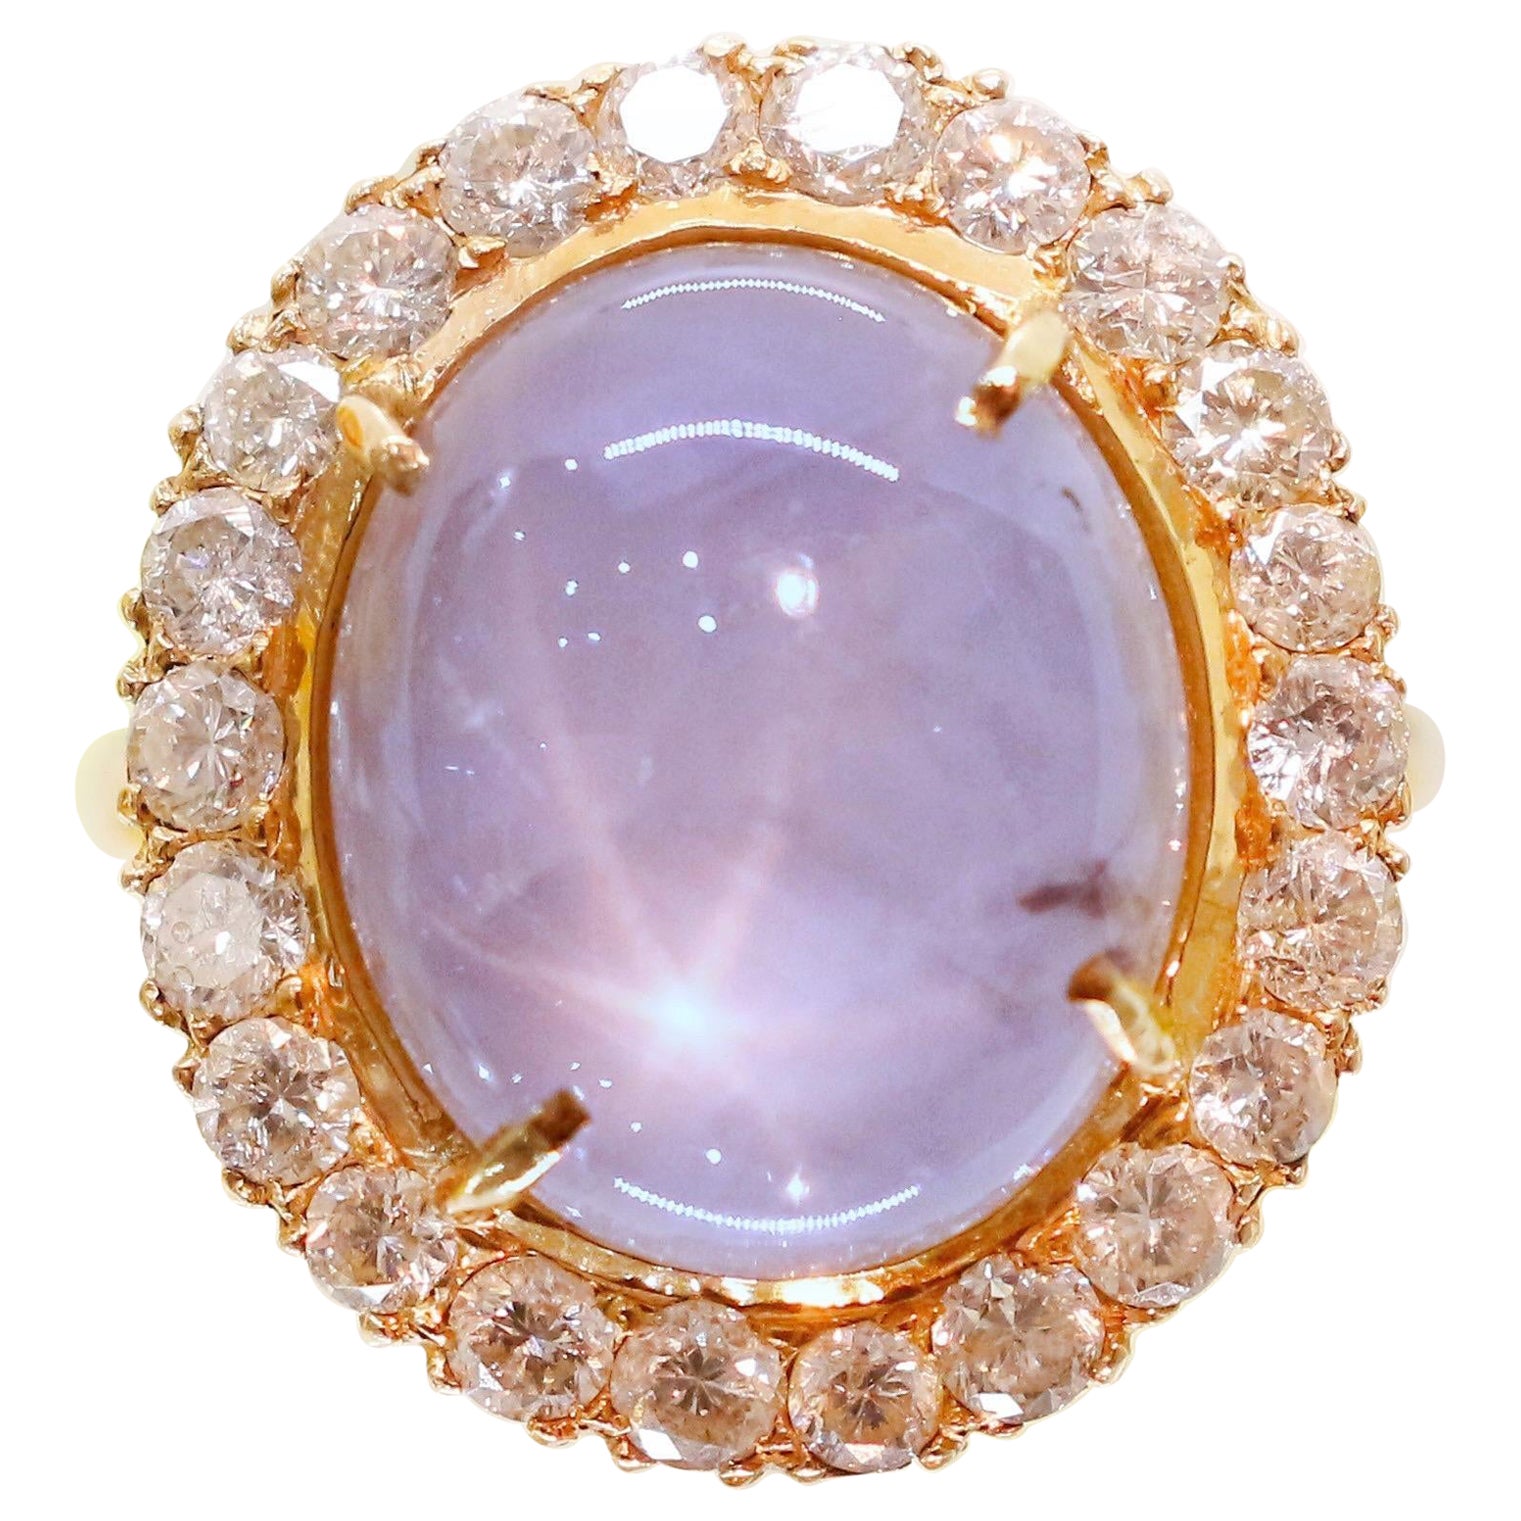 16 Carat Star Sapphire Ring with Diamonds